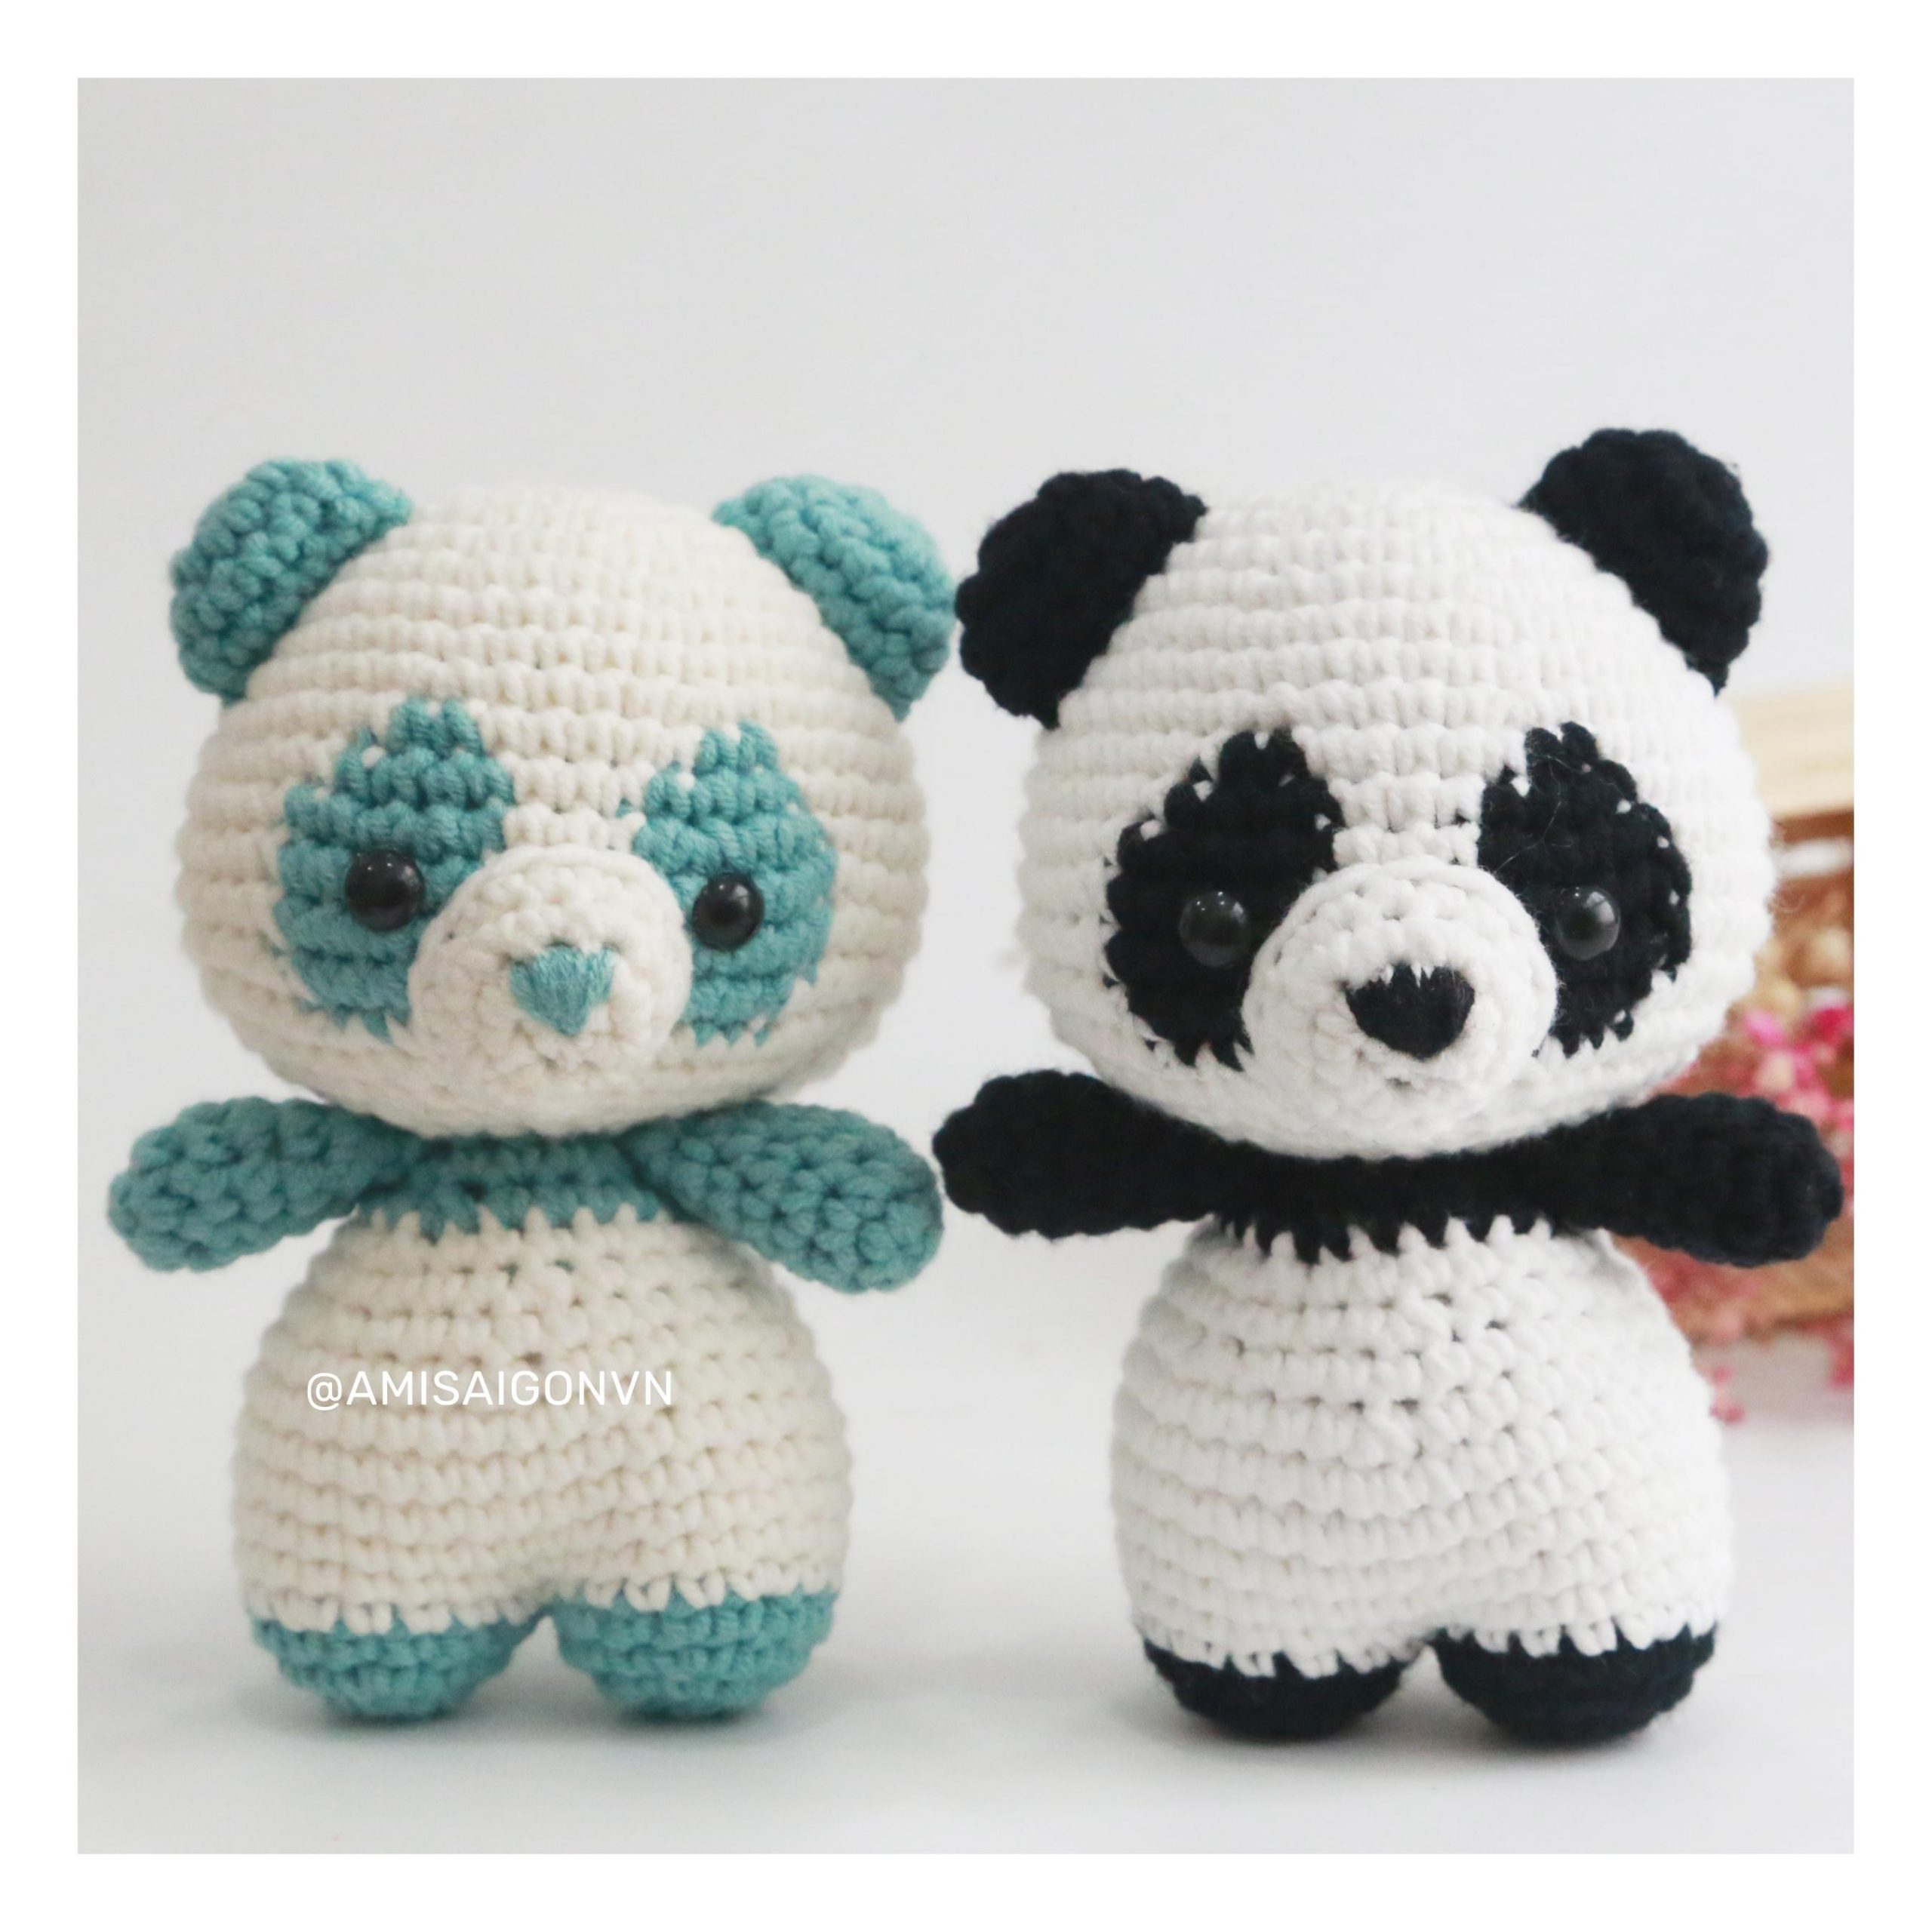 1SG012S1_Panda-Amigurumi-crochet-pattern-by-AmiSaigon-14-pages